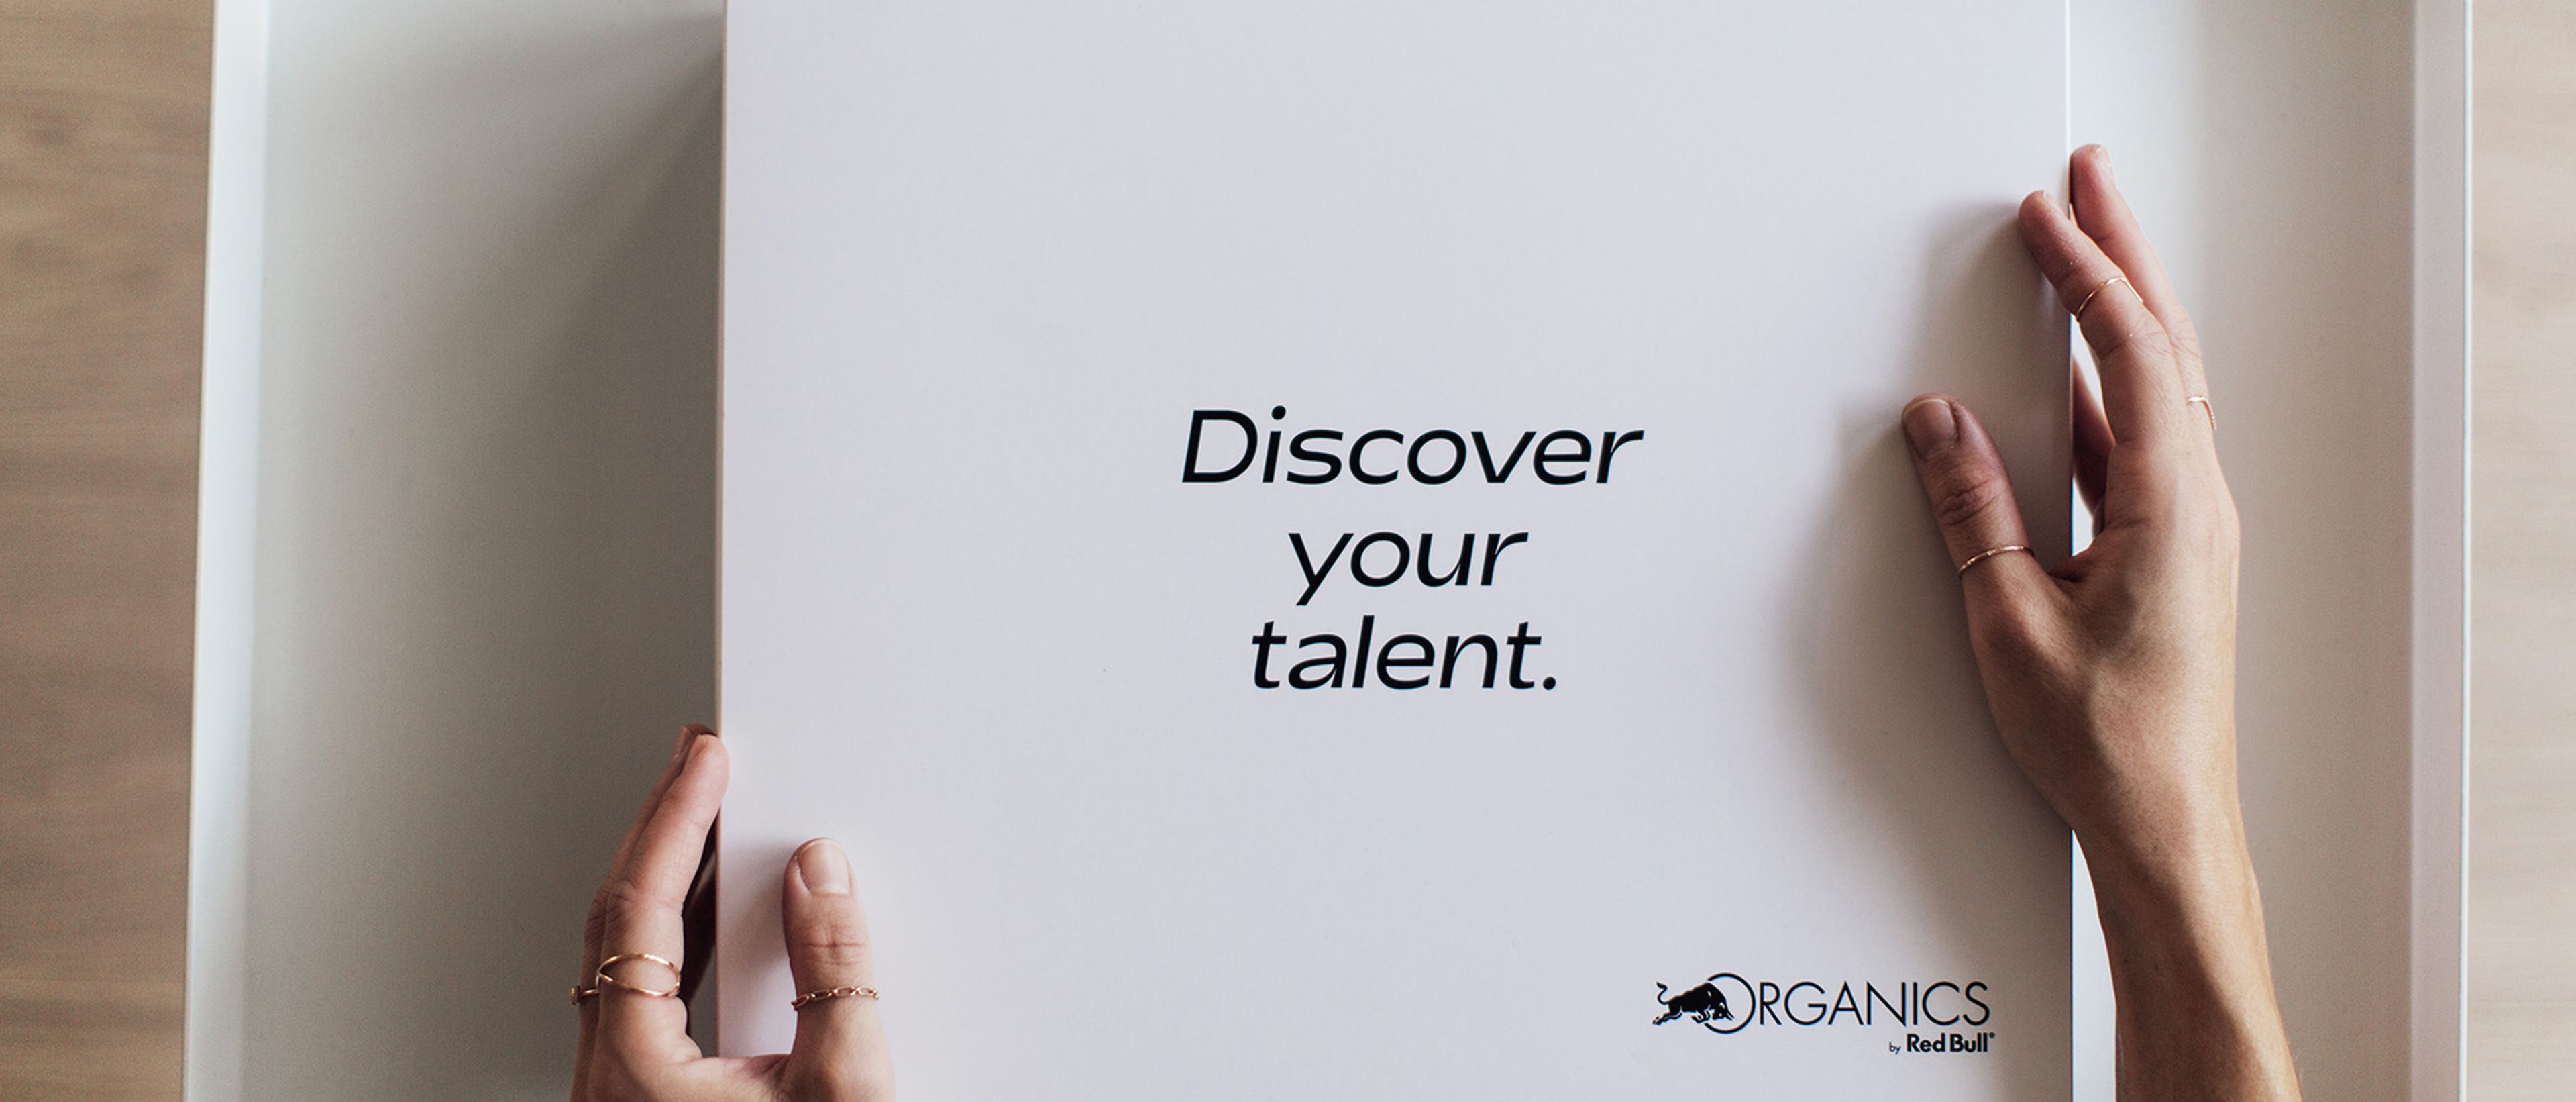 Geschlossene Packung von Red Bull Organics Dosen mit Aufschrift "Discover your talent."